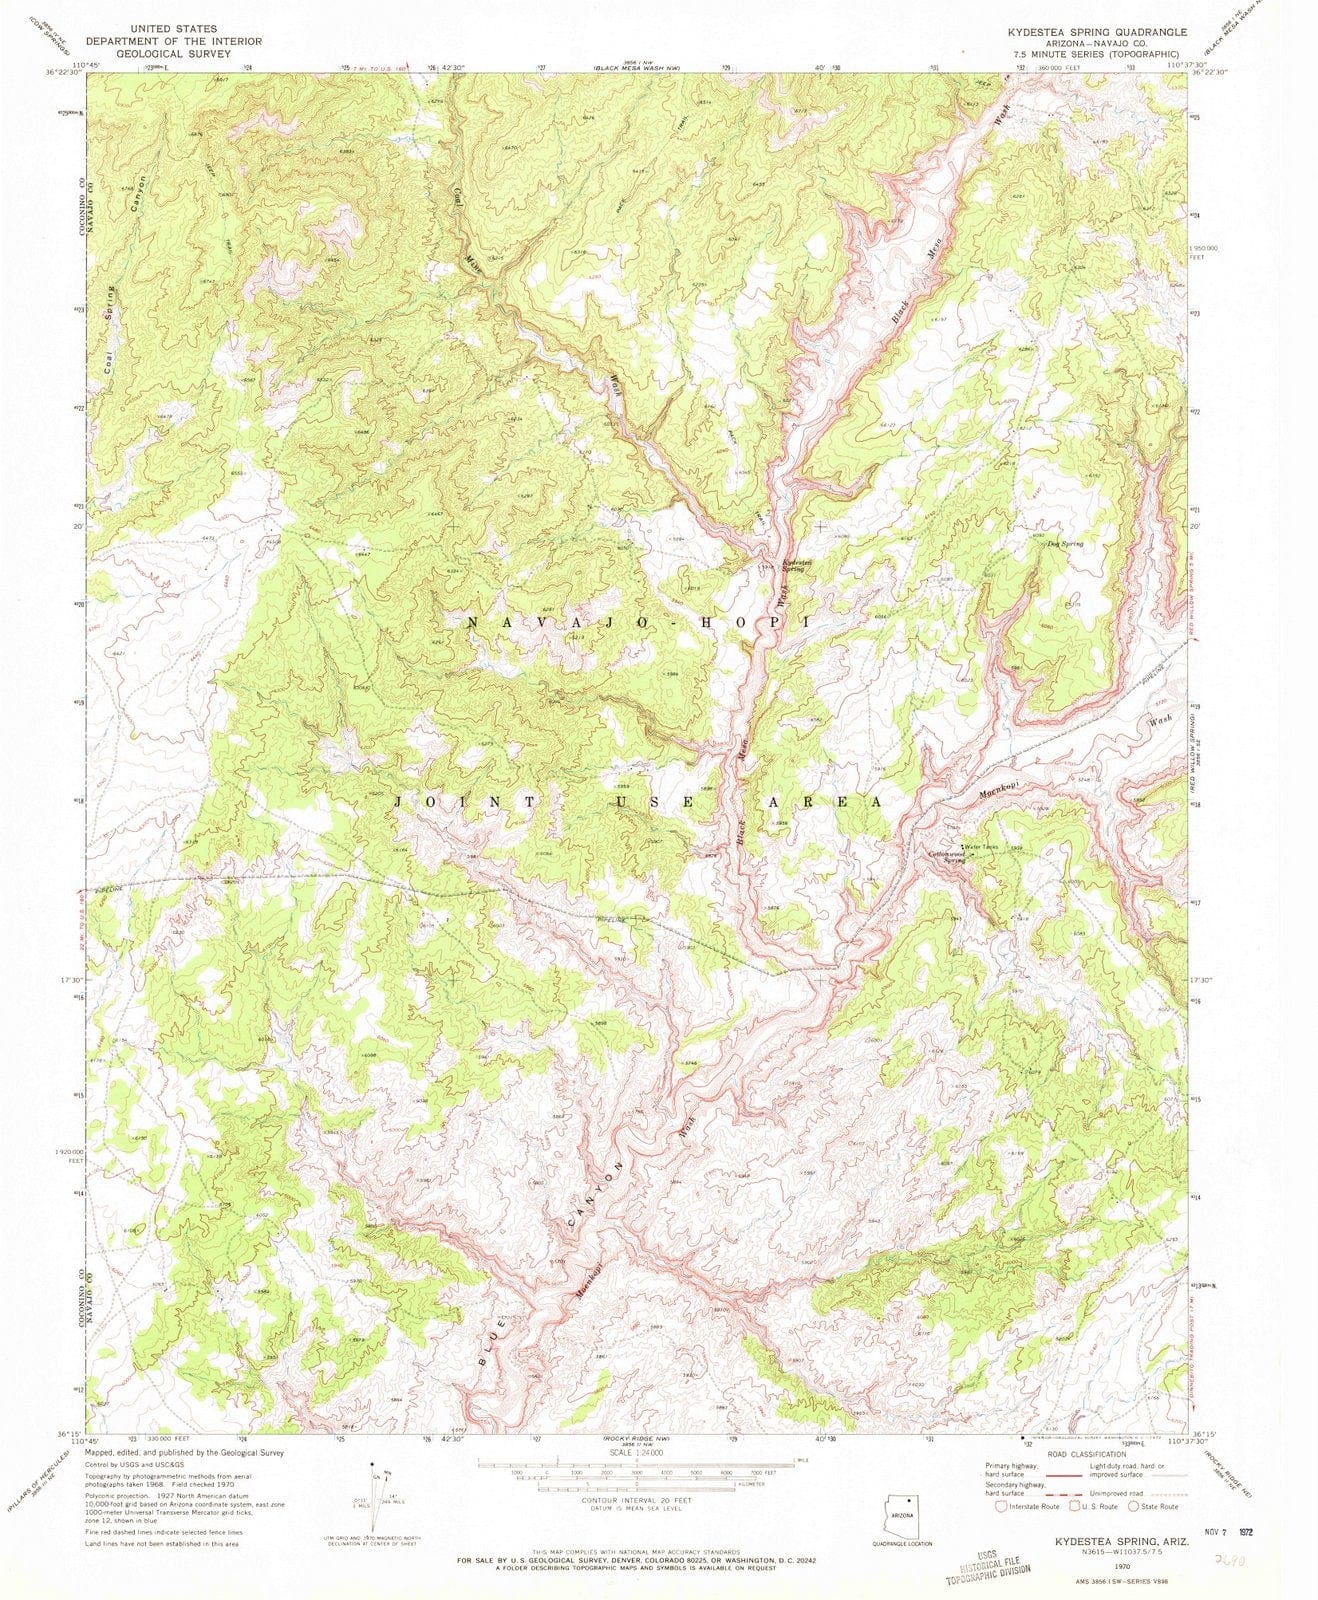 1970 Kydestea Spring, AZ - Arizona - USGS Topographic Map